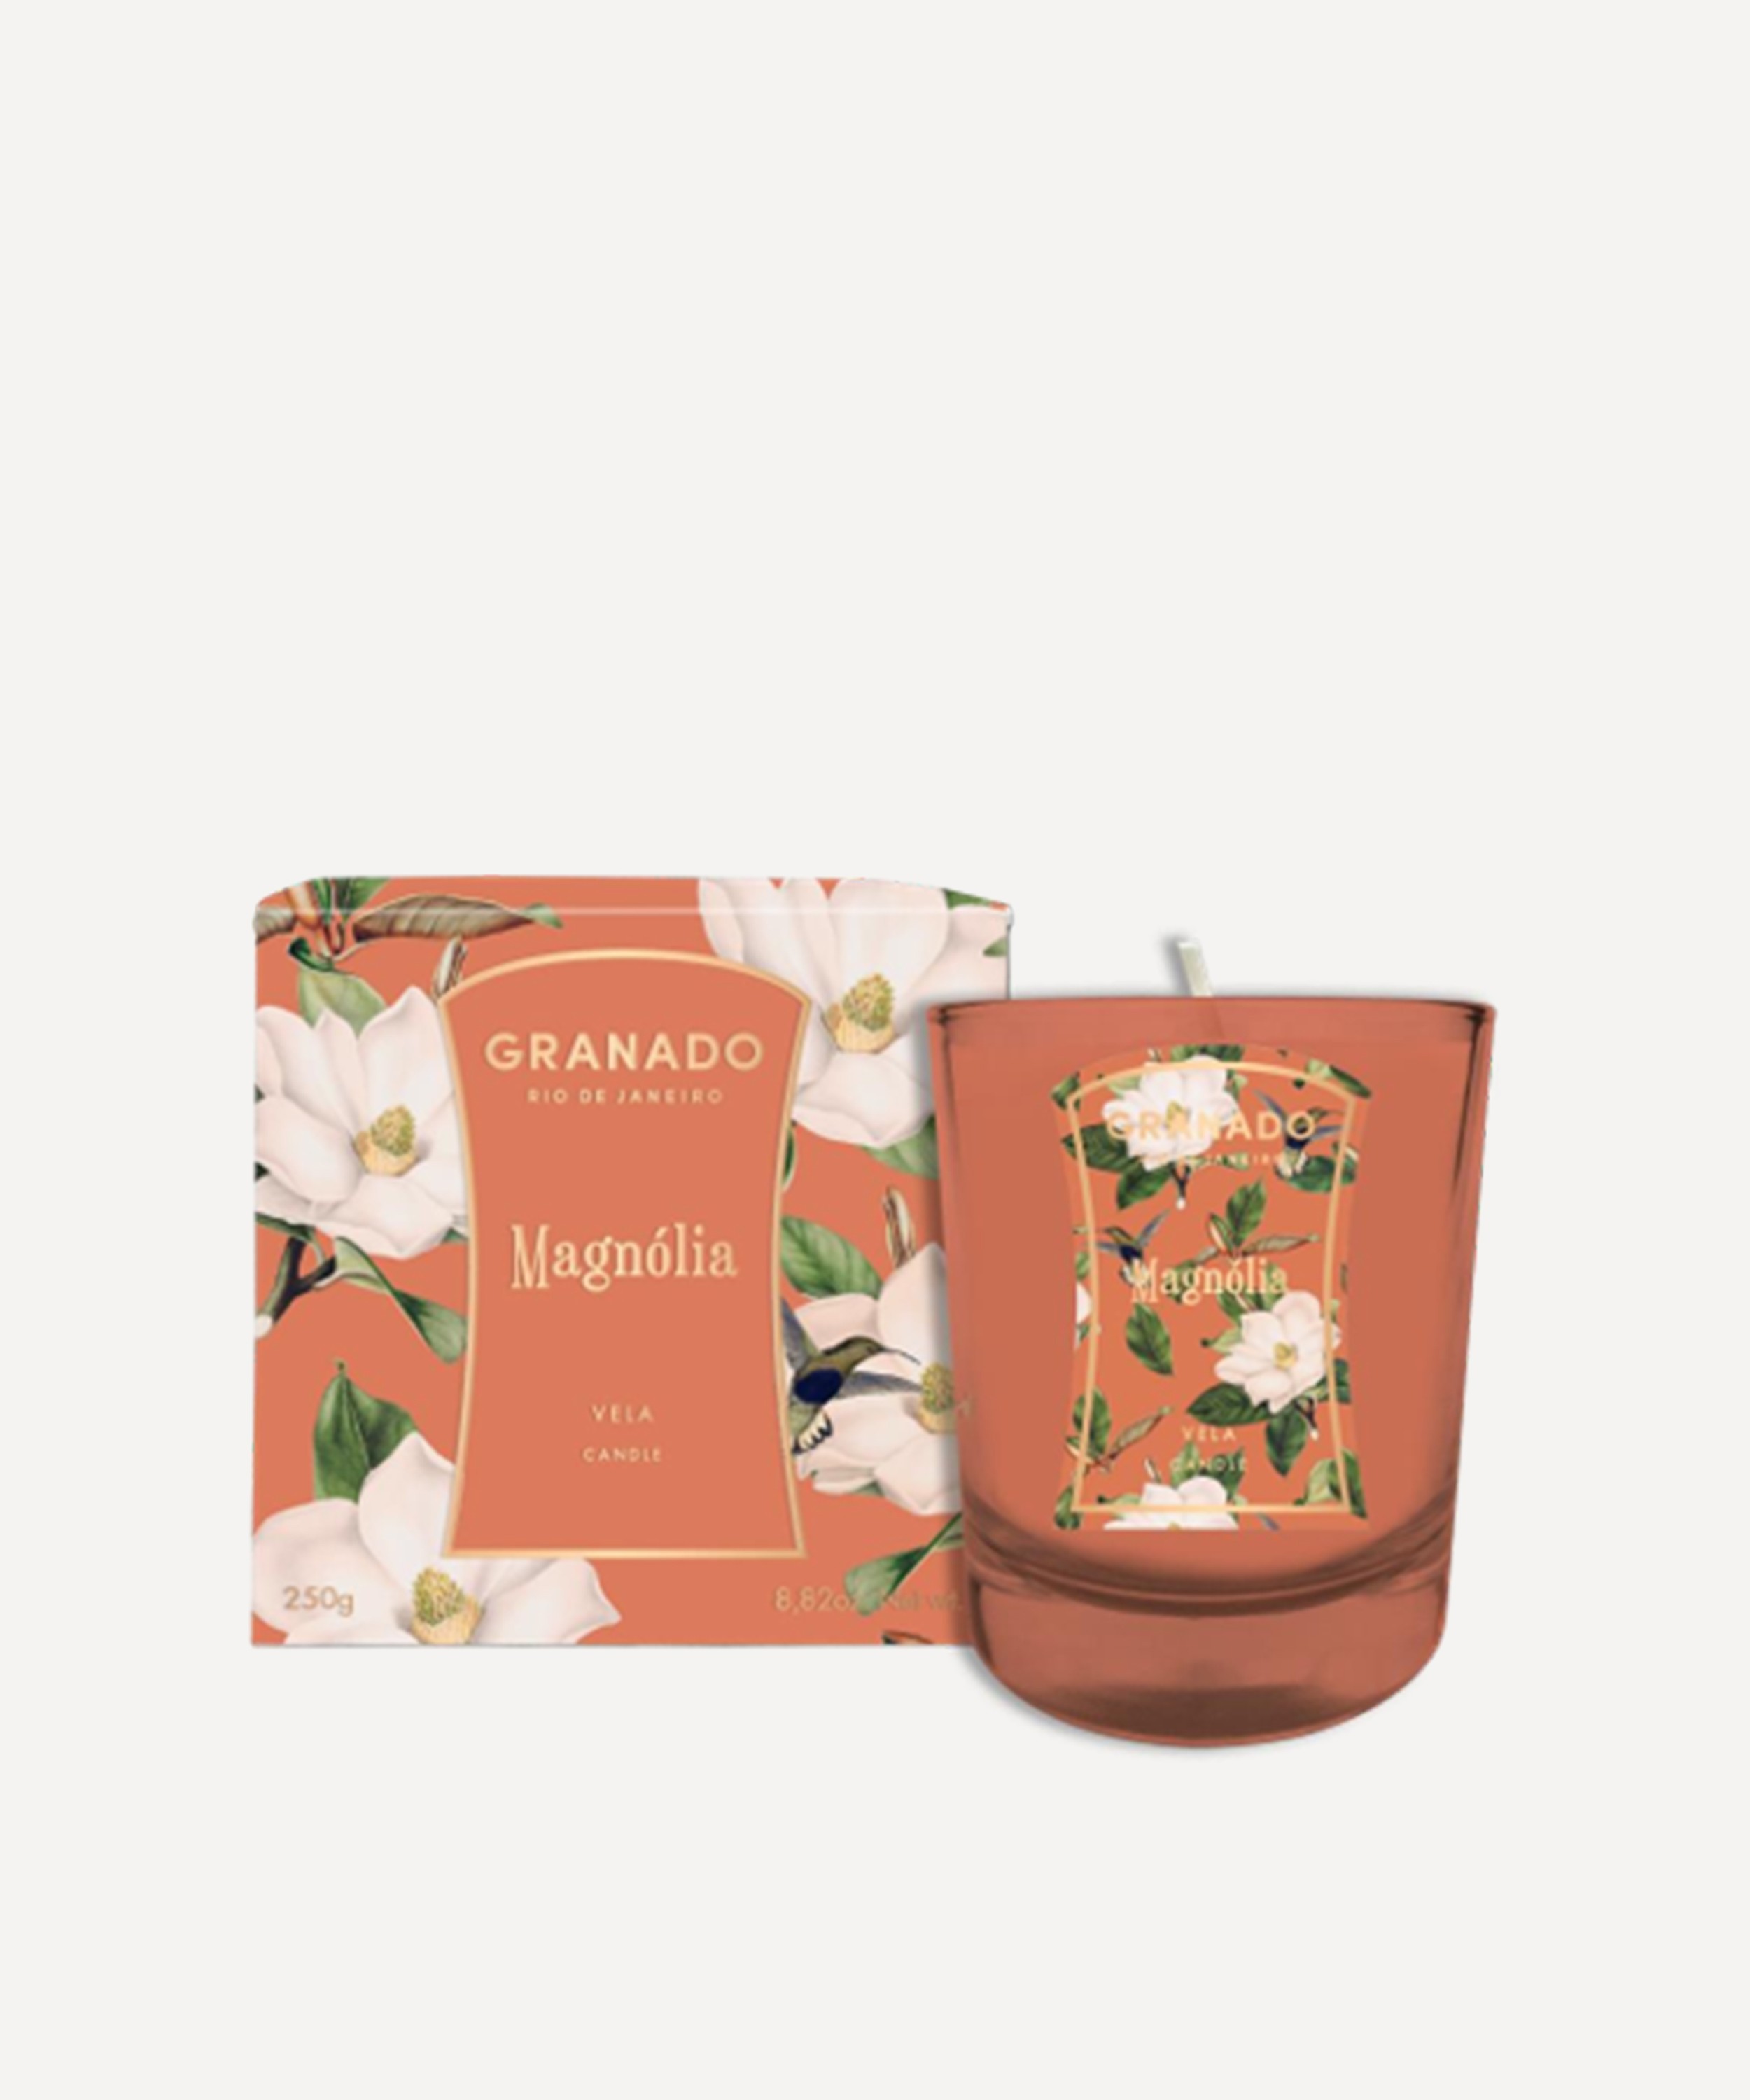 Granado - Magnolia Scented Candle 250g